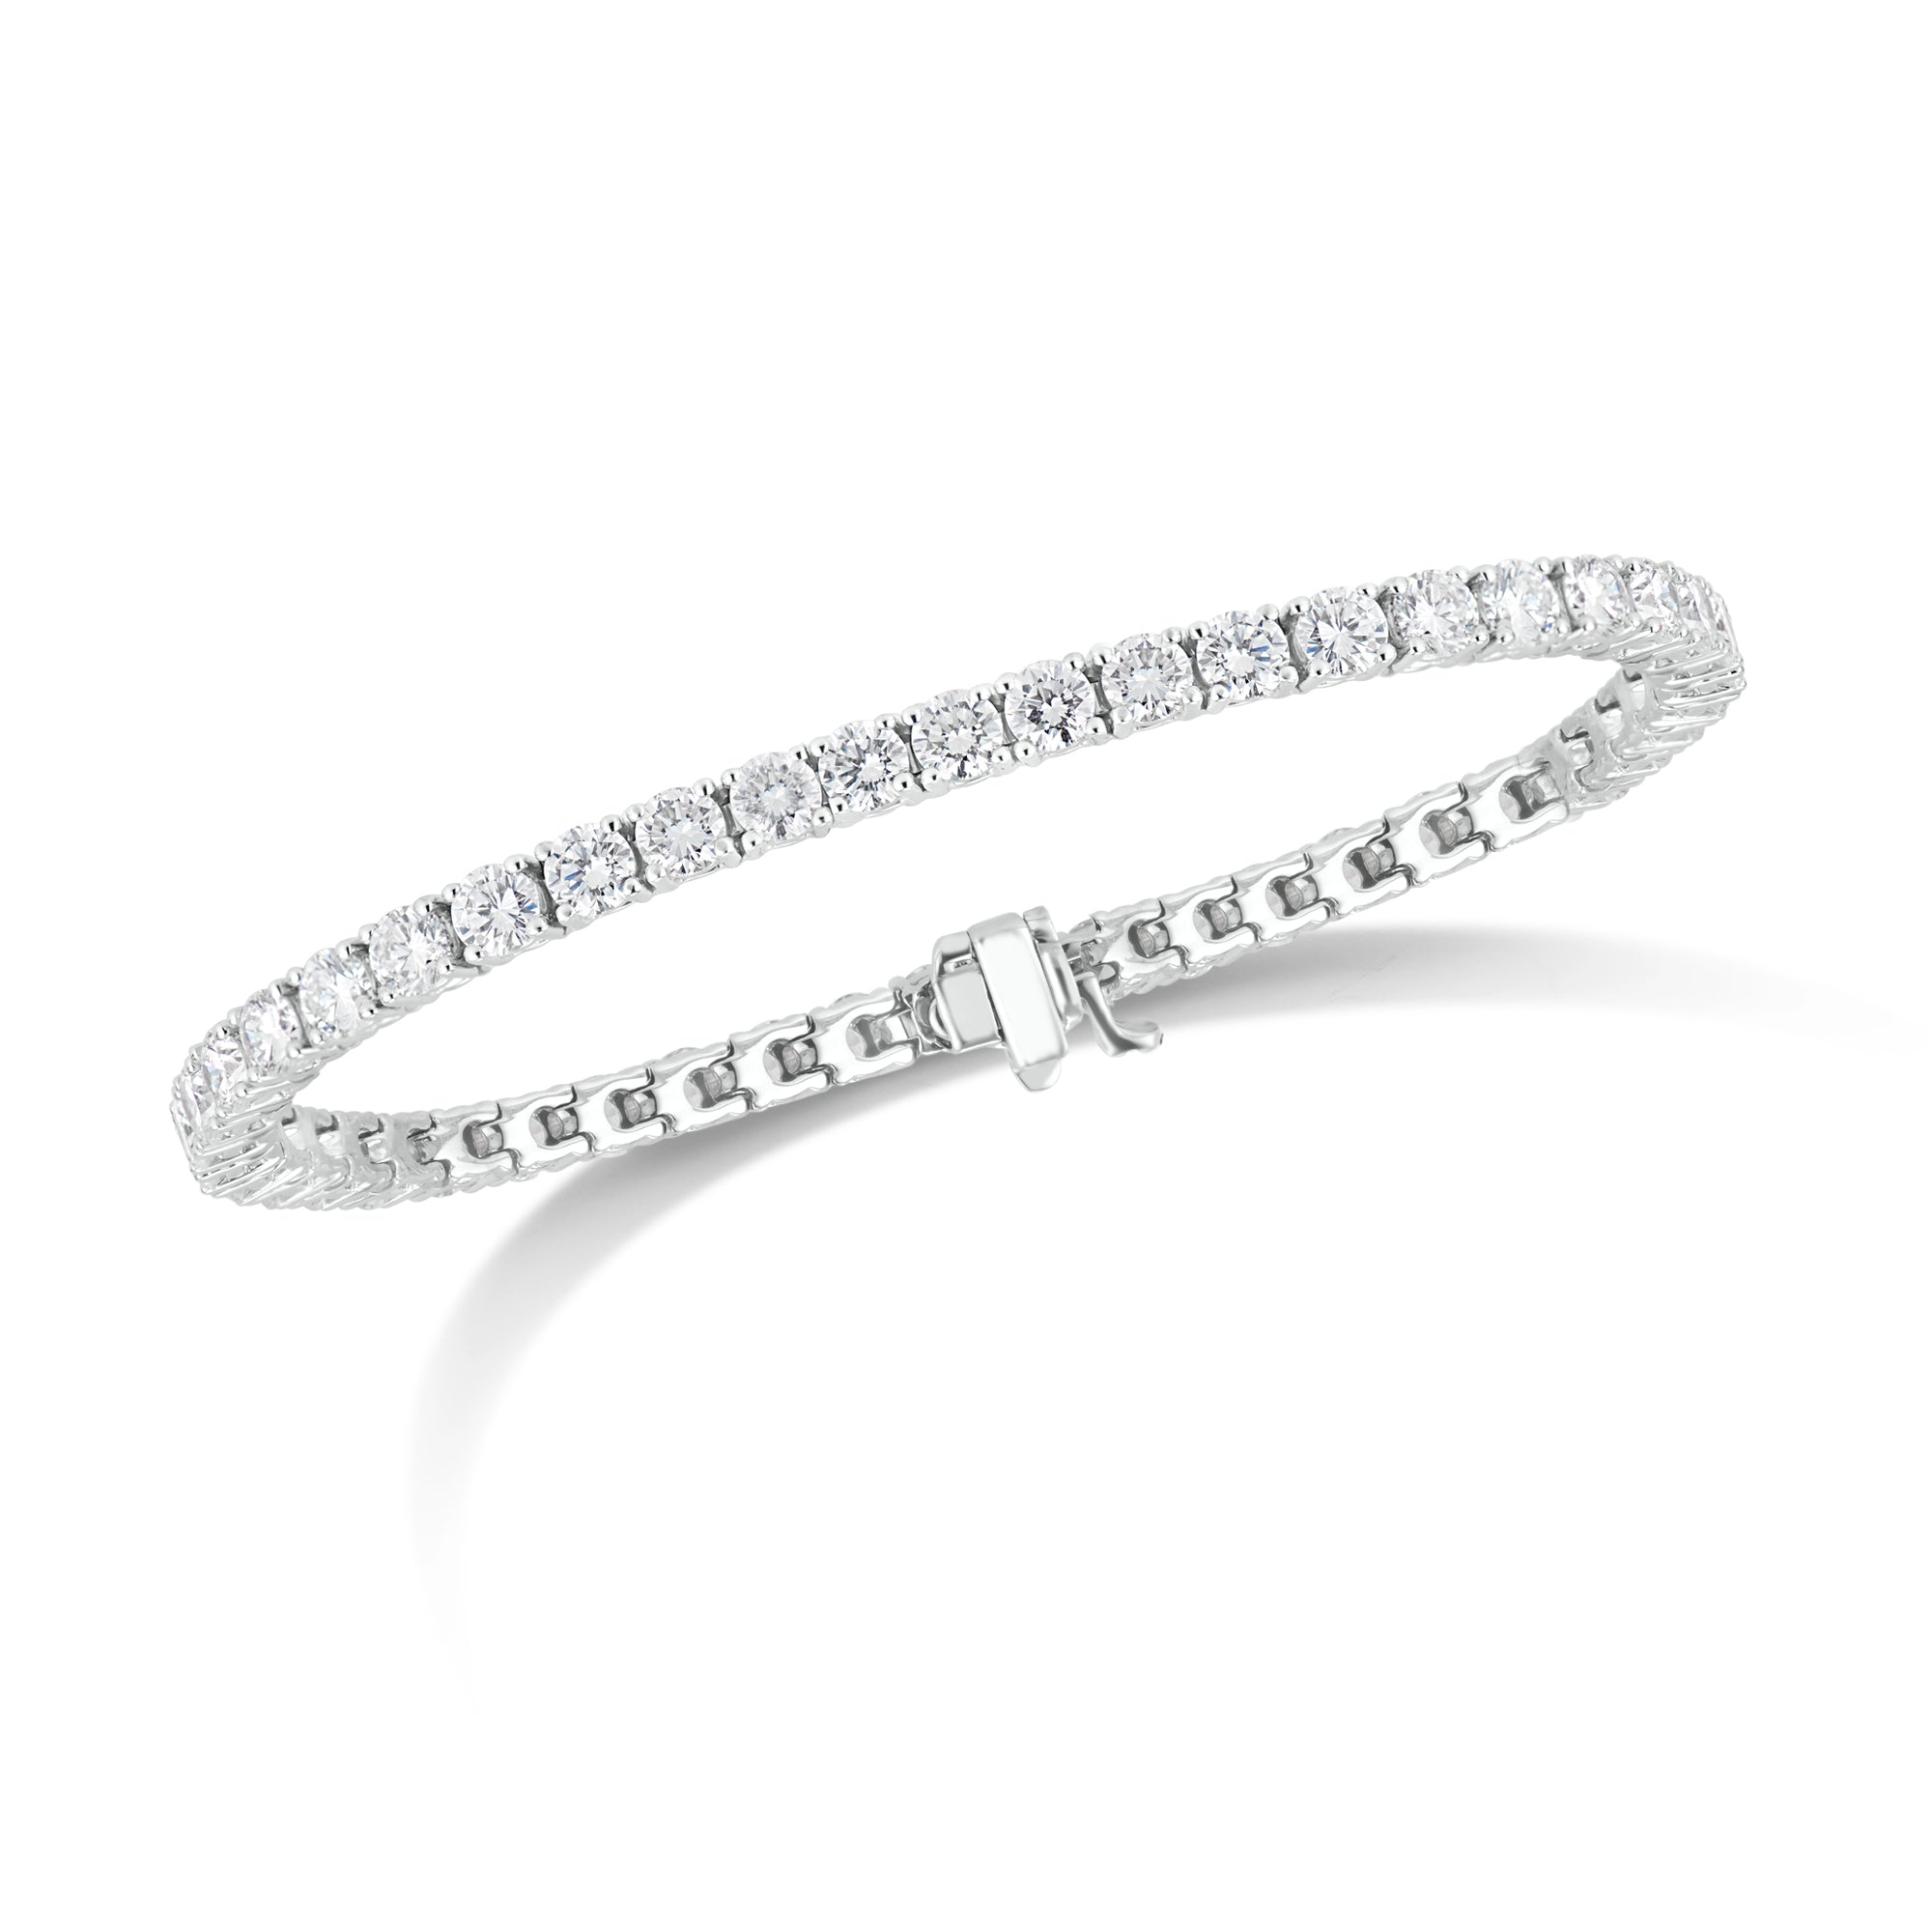 Diamond Classic Tennis Bracelet  - 14K gold weighing 13.6 grams  - 47 round diamonds totaling 8.67 carats